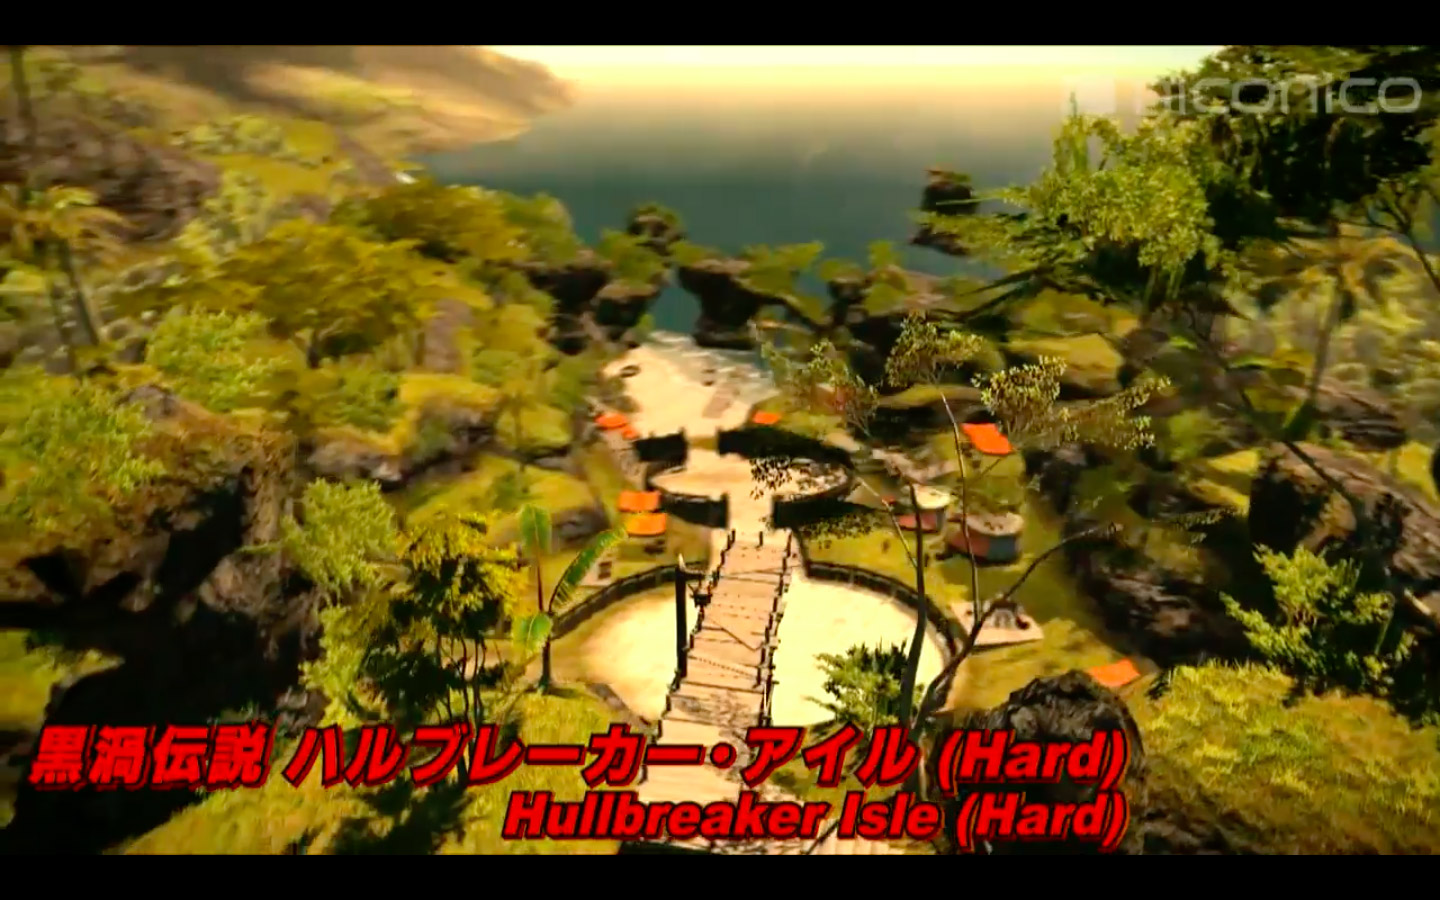 Final Fantasy XIV Patch 3.3 Hullbreaker Isle Hard